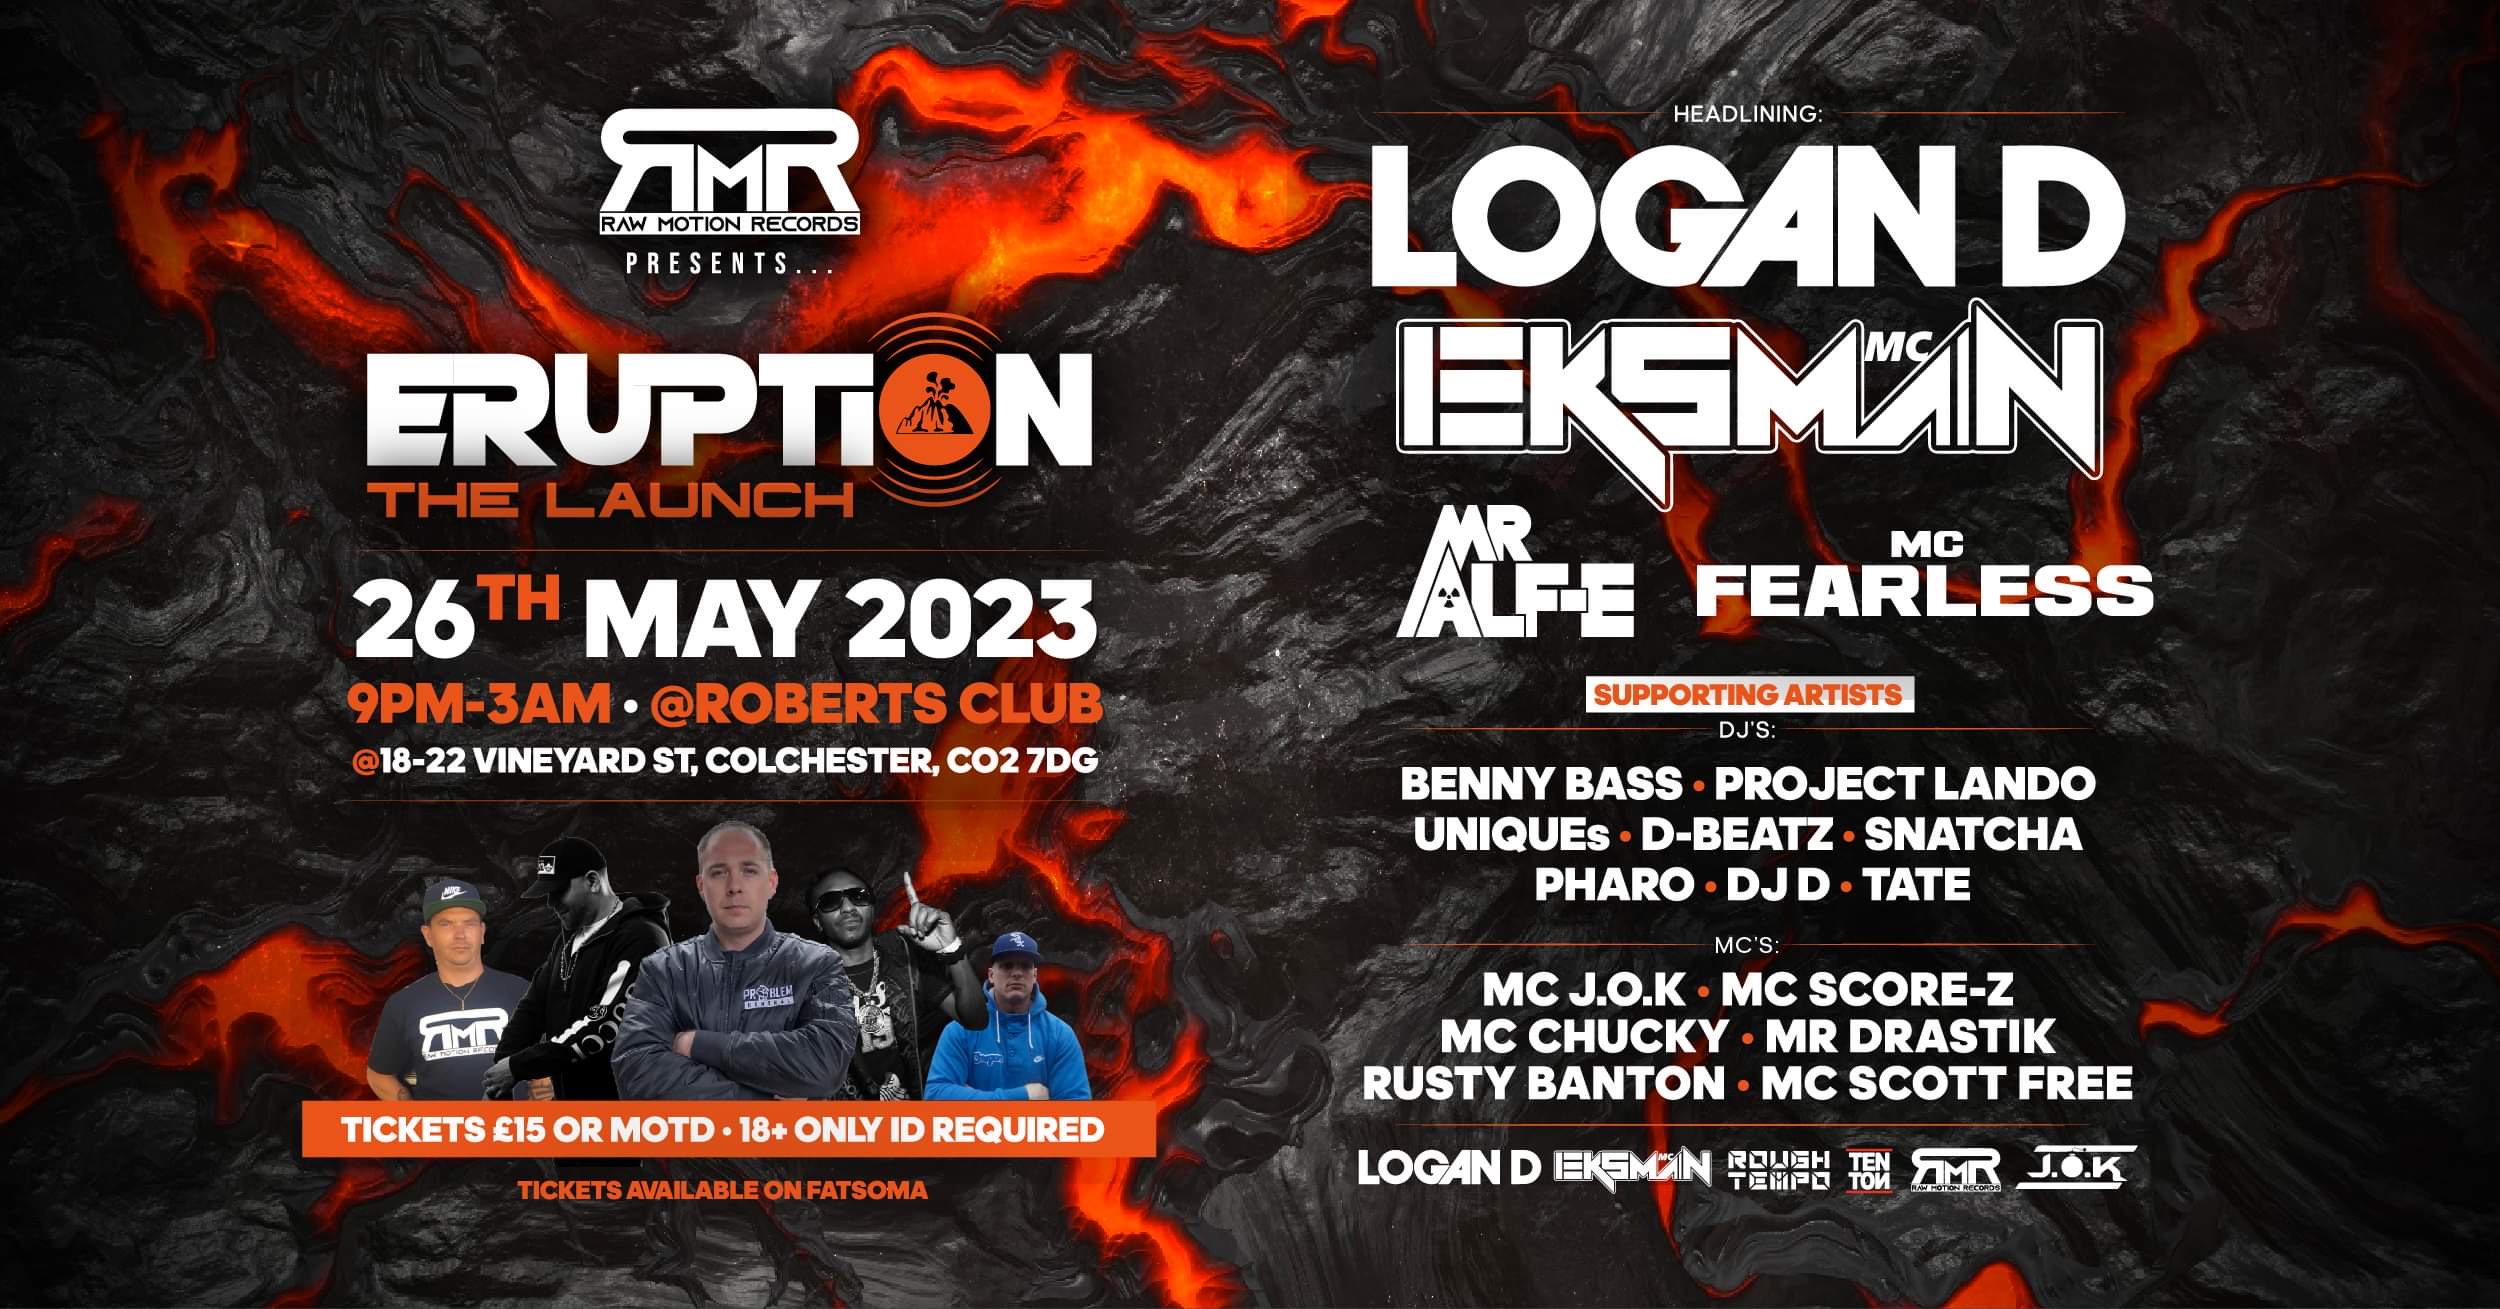 Eruption Logan D Eksman Mc Fearless at Roberts Club, Colchester on 26th May  2023 | Fatsoma